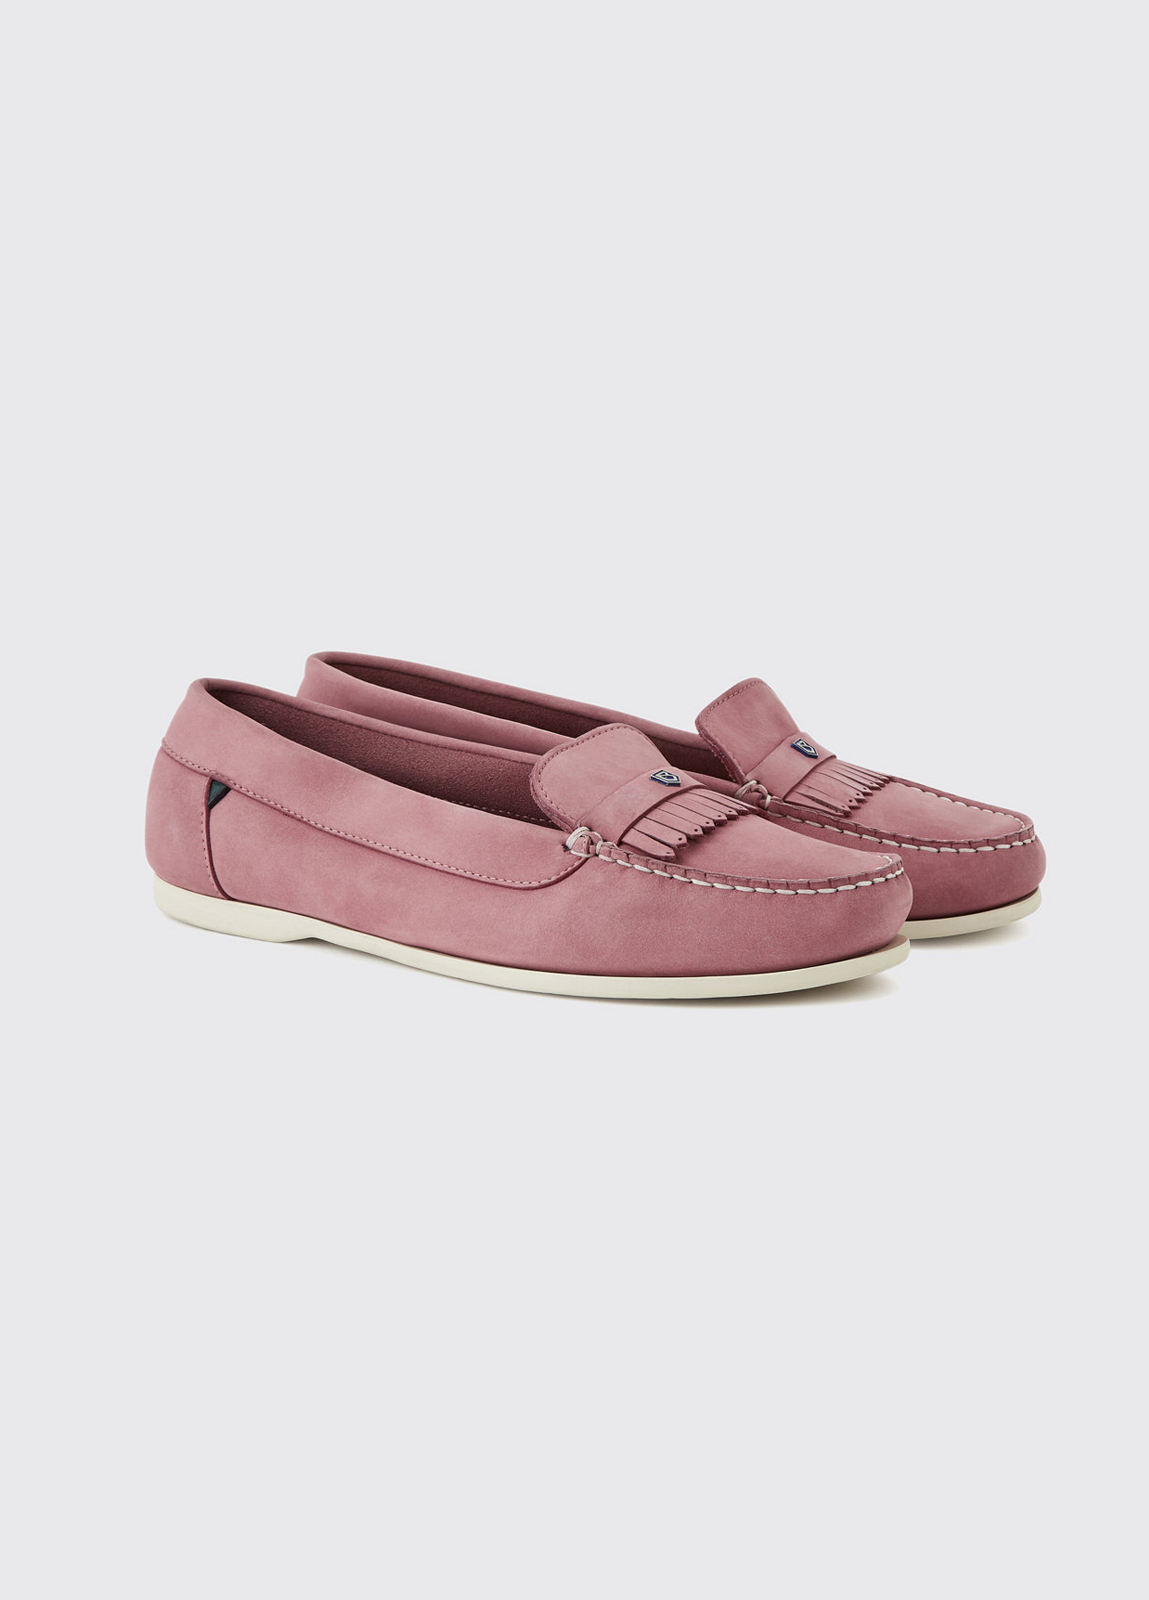 Florence Deck Shoe - Blossom